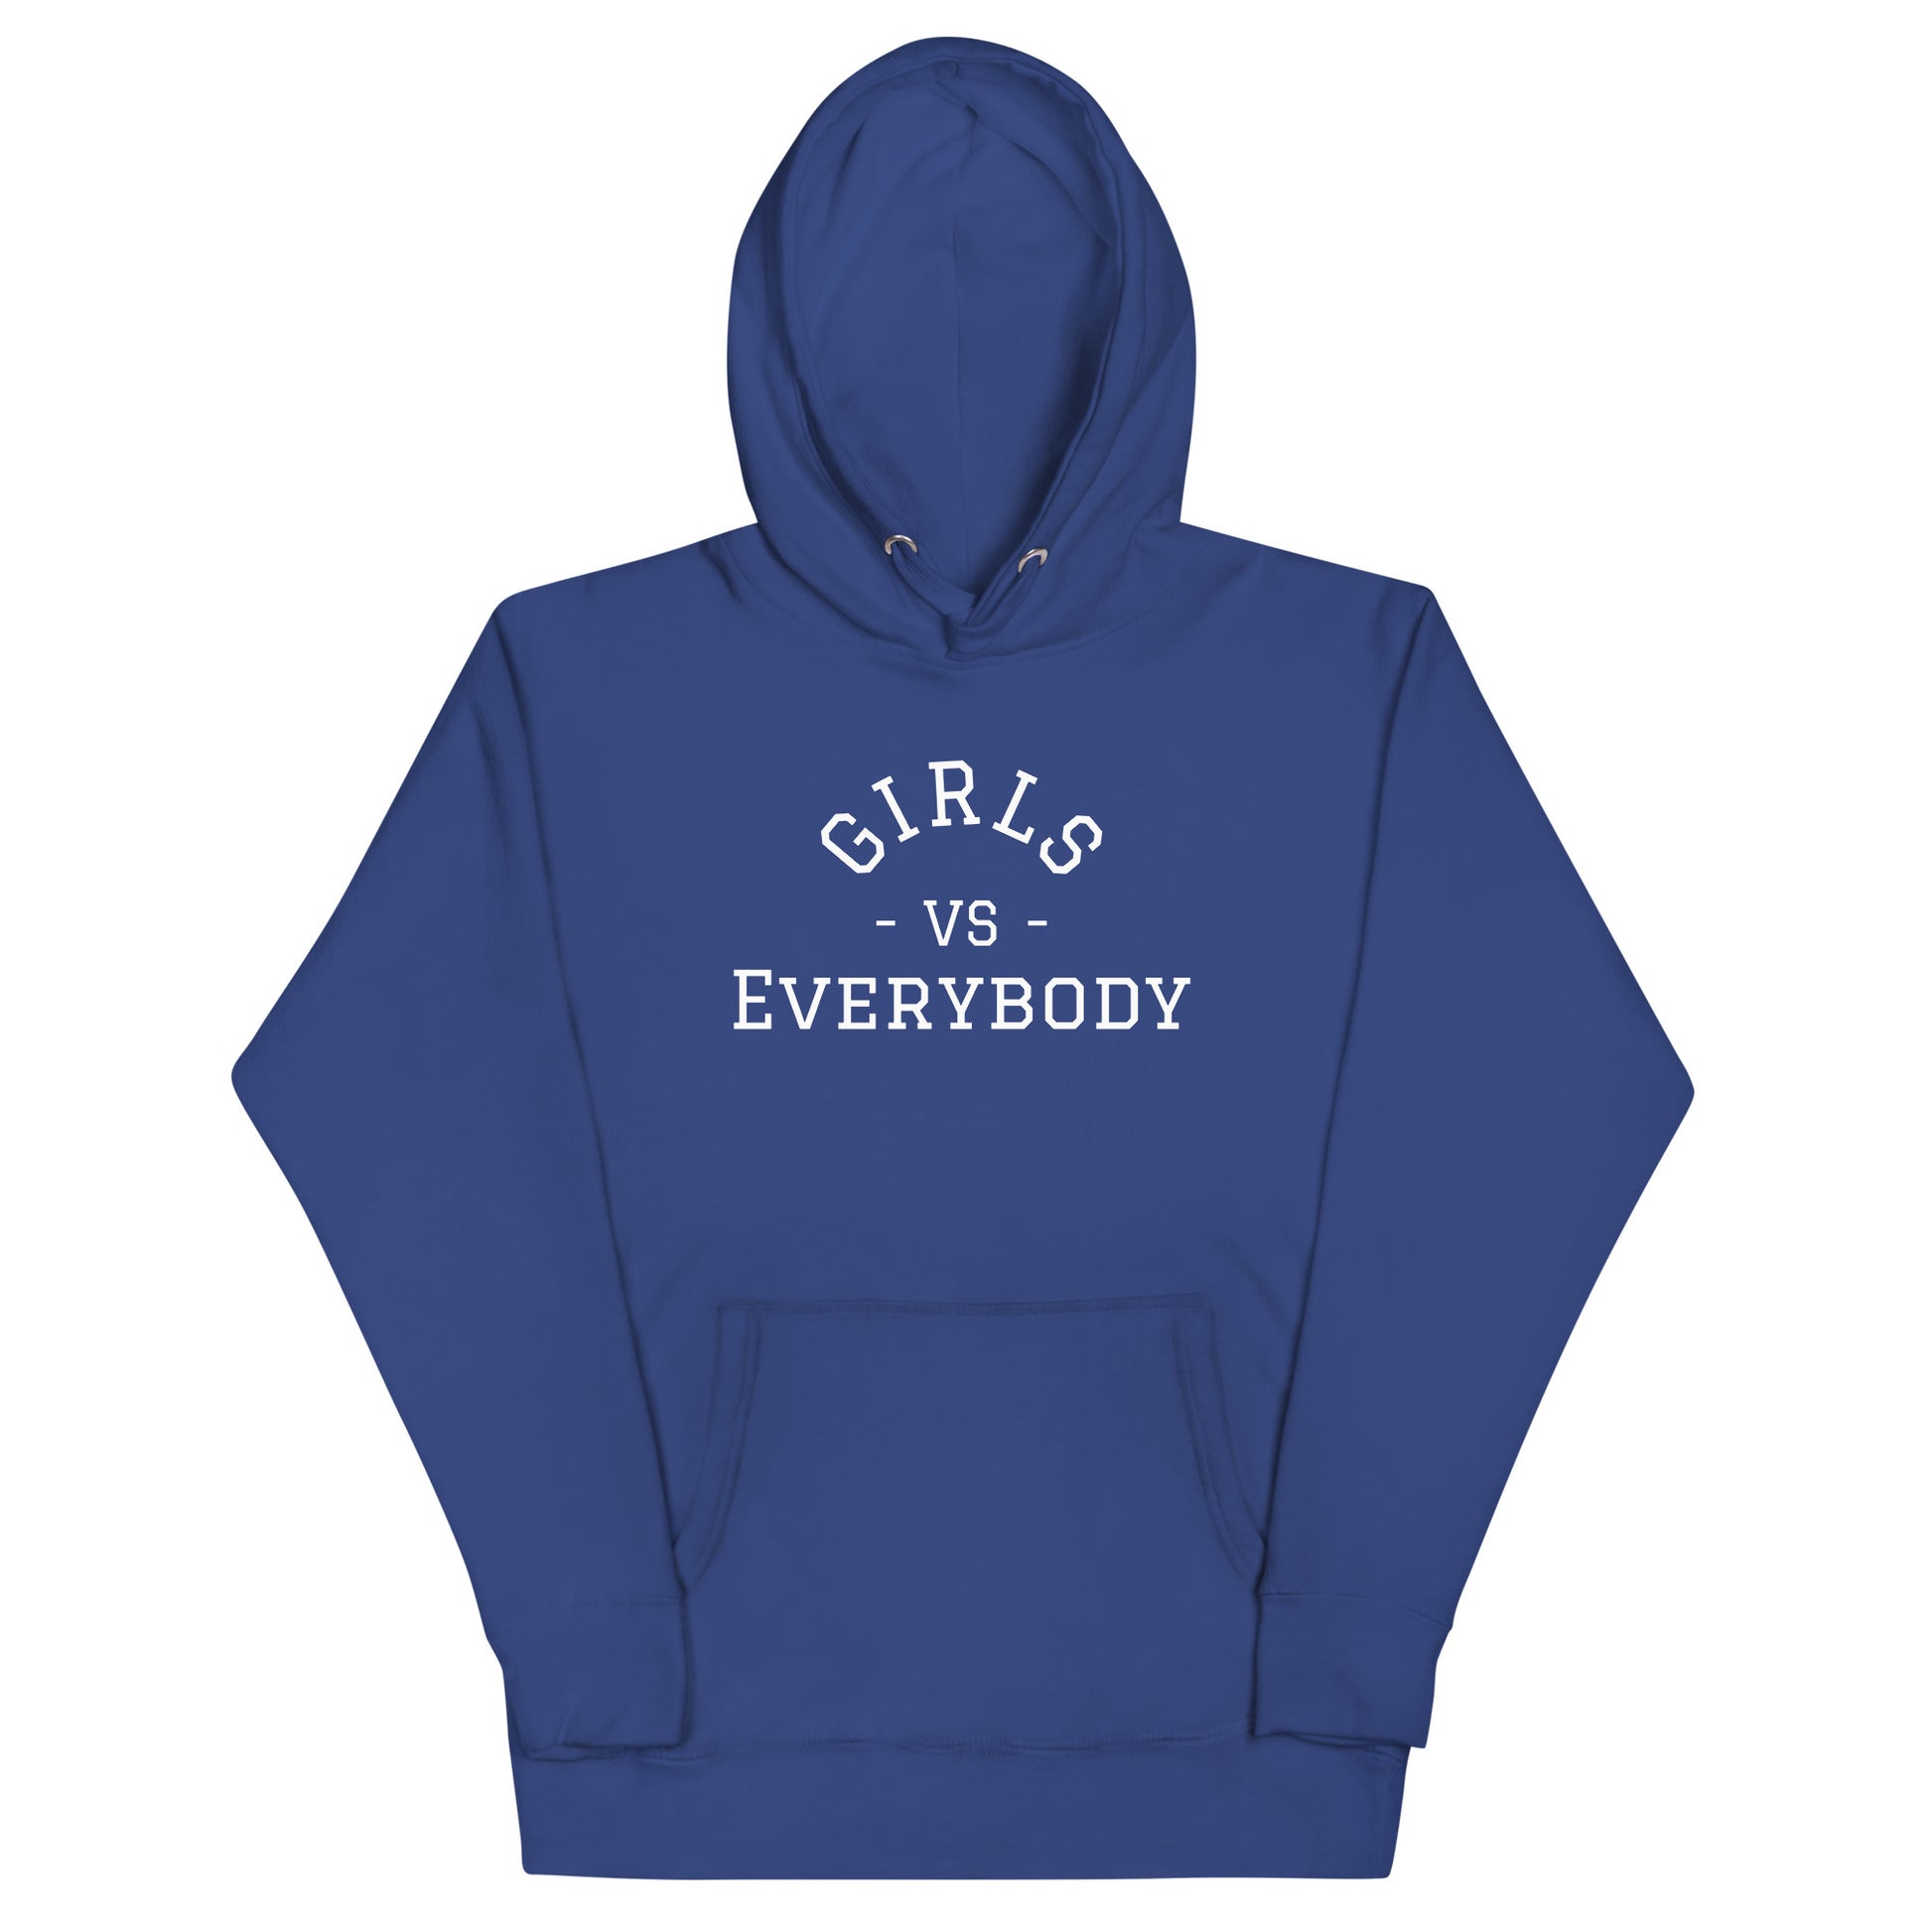 Women's royal blue hoodie sweatshirt that says 'Girls VS Everybody'